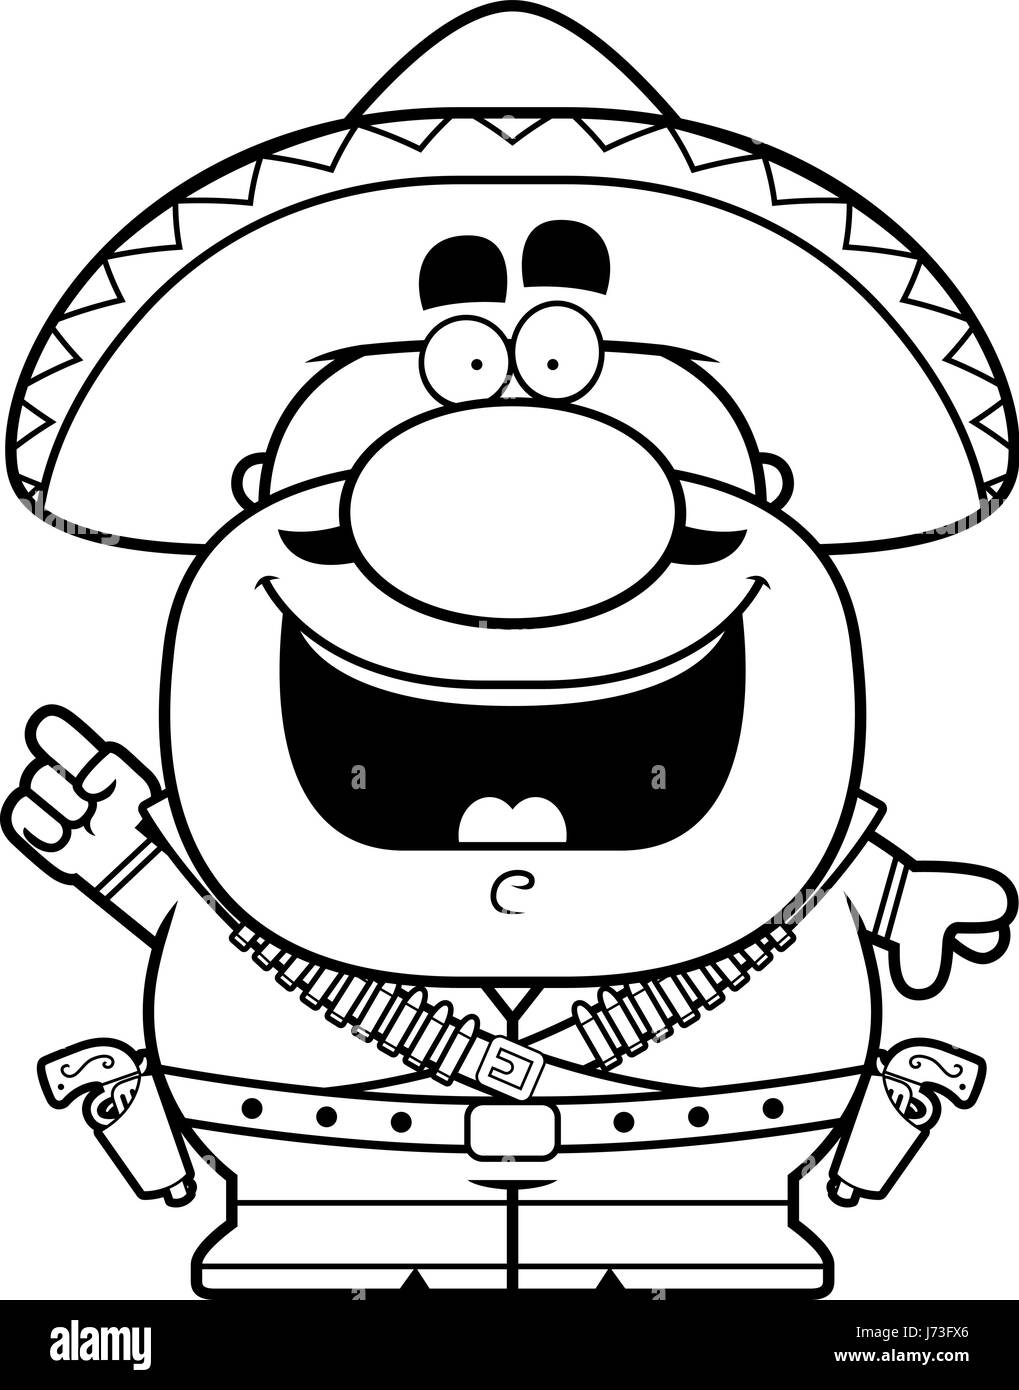 A cartoon illustration of a bandito with an idea Stock Vector Image ...